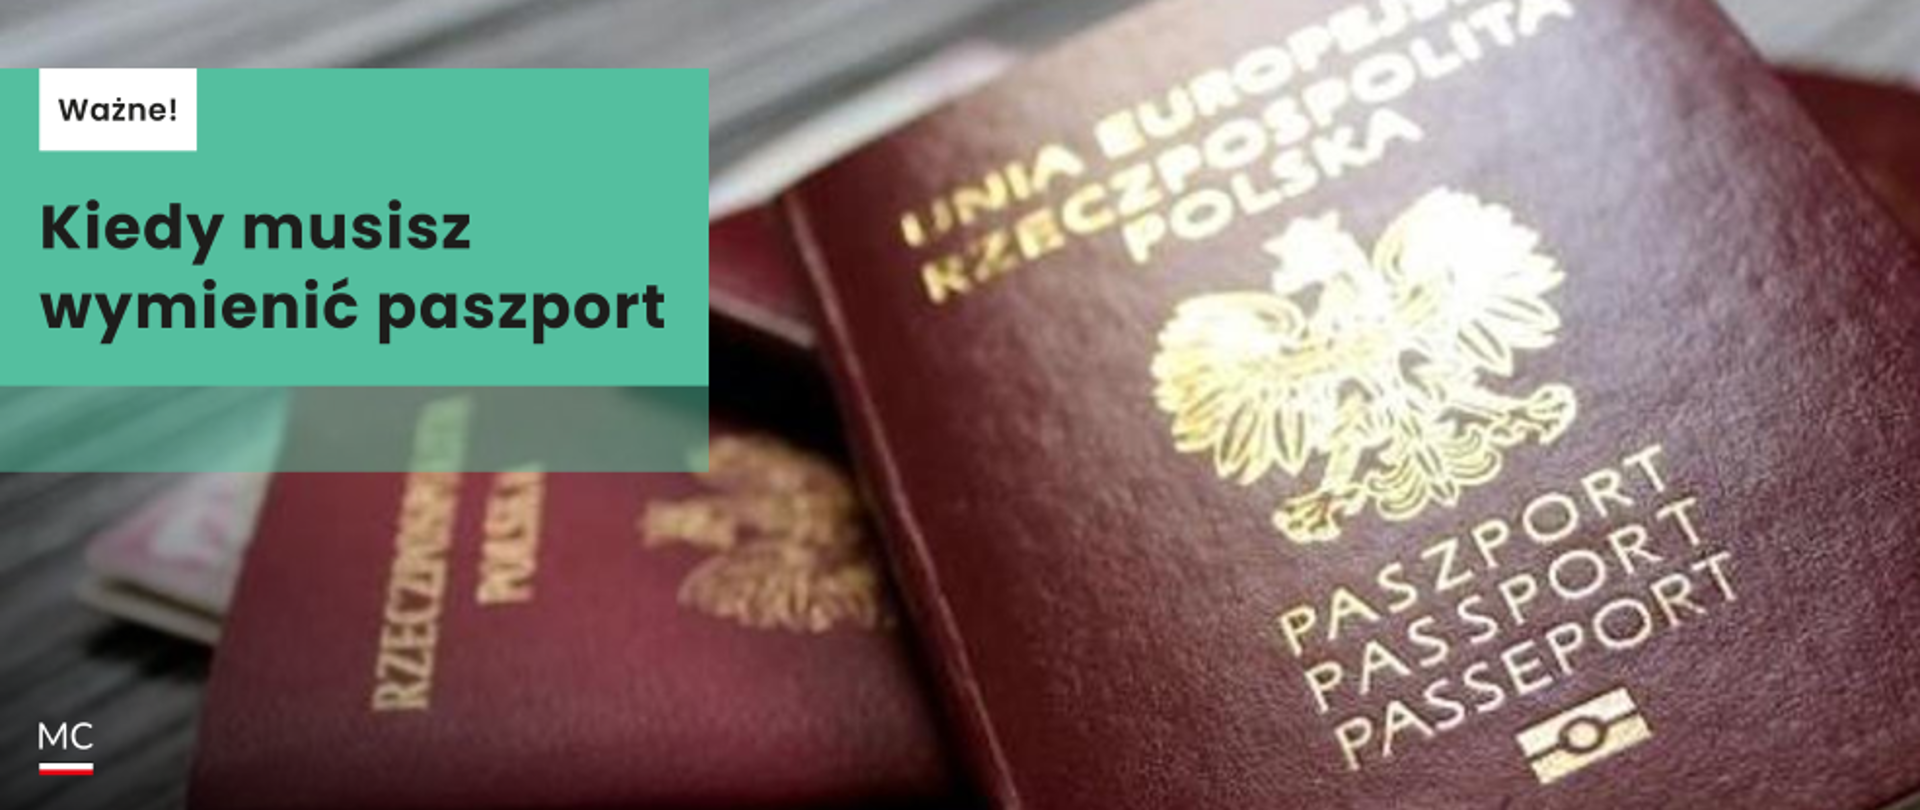 Antes de salir de vacaciones, asegúrese de que tu pasaporte siga siendo válido o que no esté a punto de vencer. 